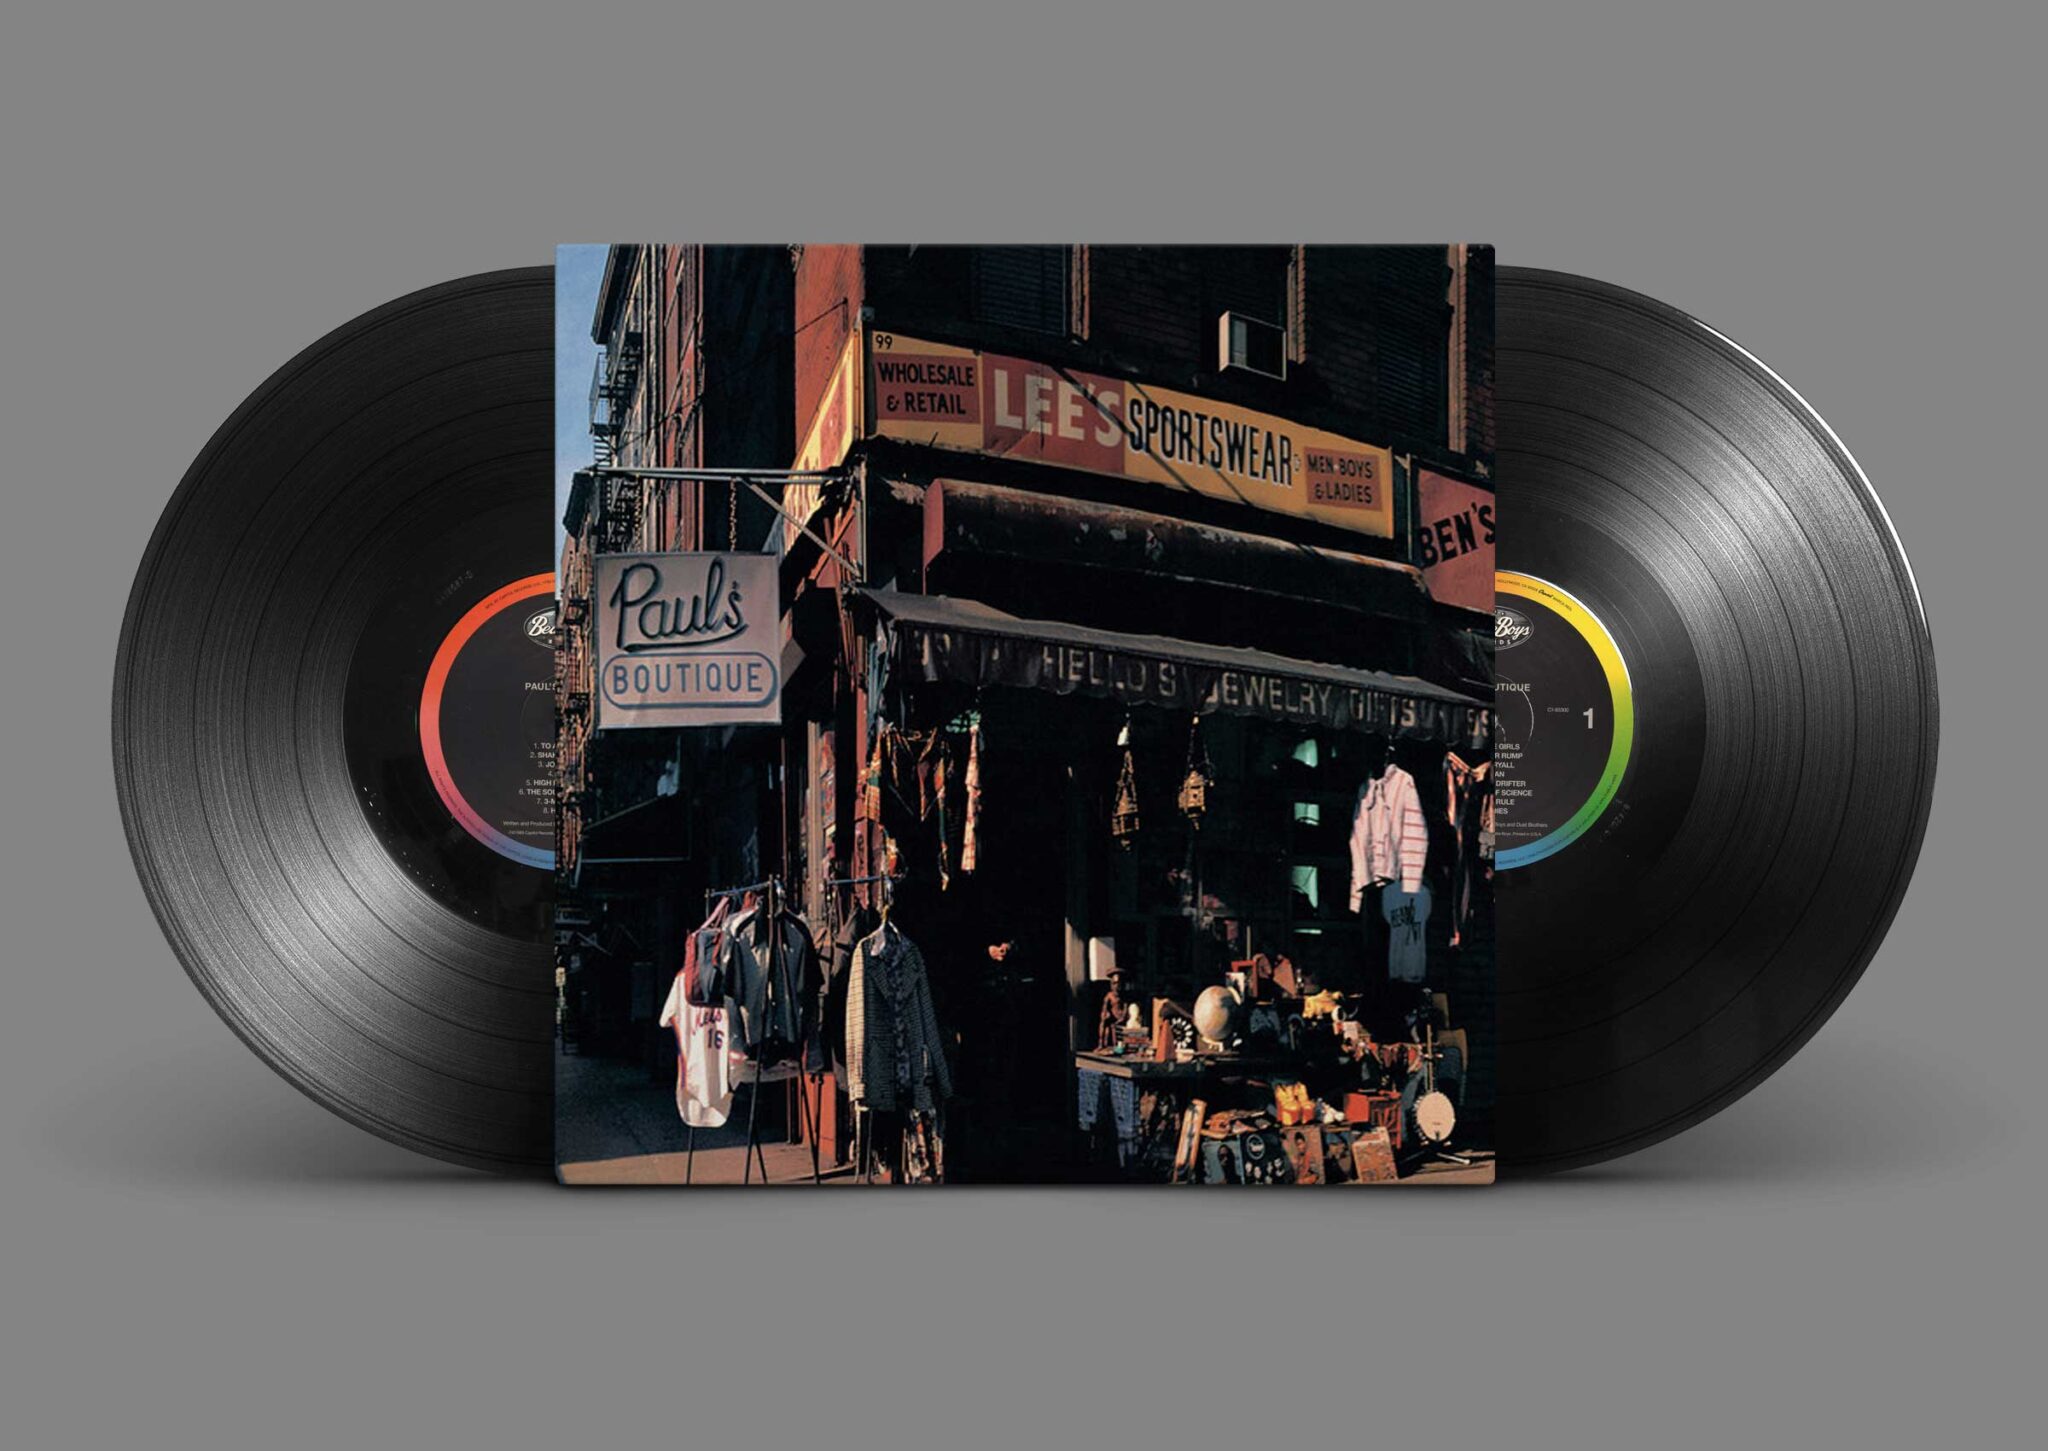 Beastie Boys - Paul's Boutique 20th Anniversary LP Vinyl